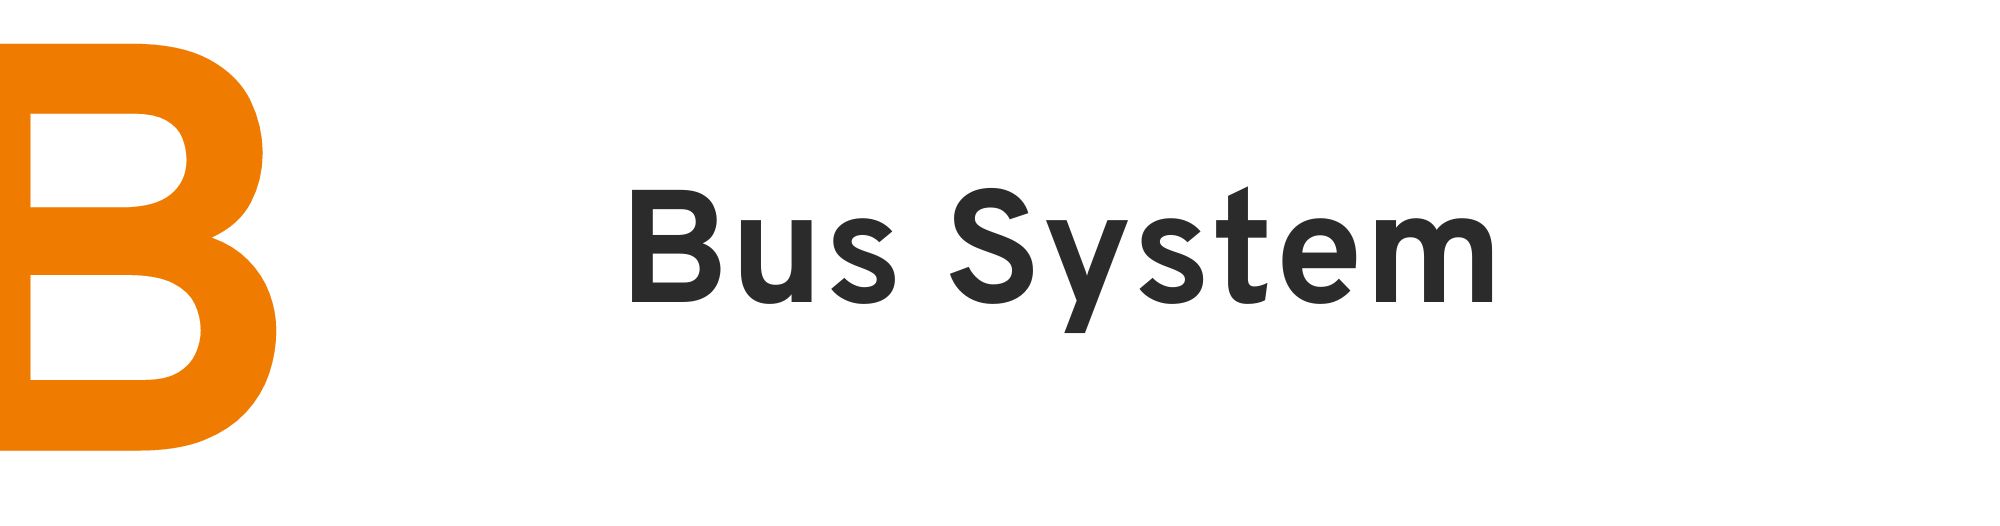 BUS System